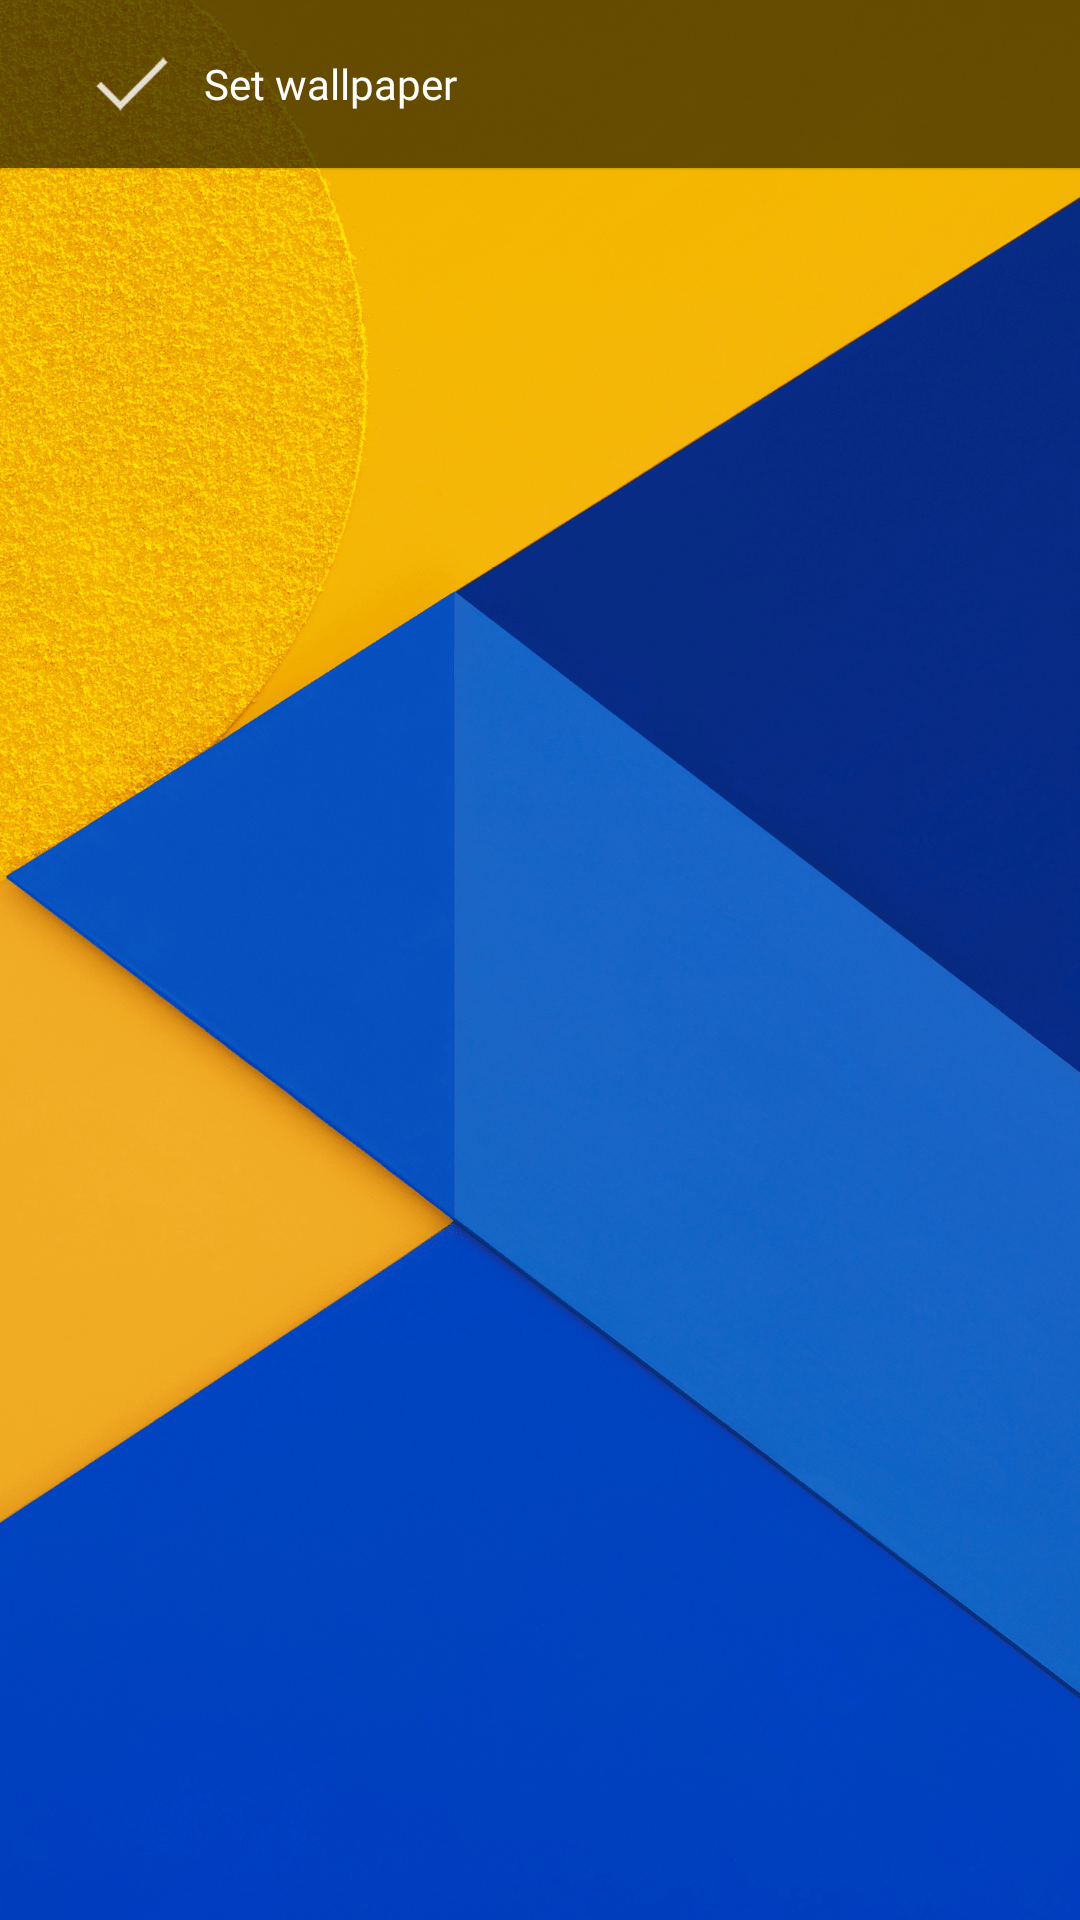 launcher wallpaper hd,blu,arancia,blu cobalto,giallo,blu elettrico